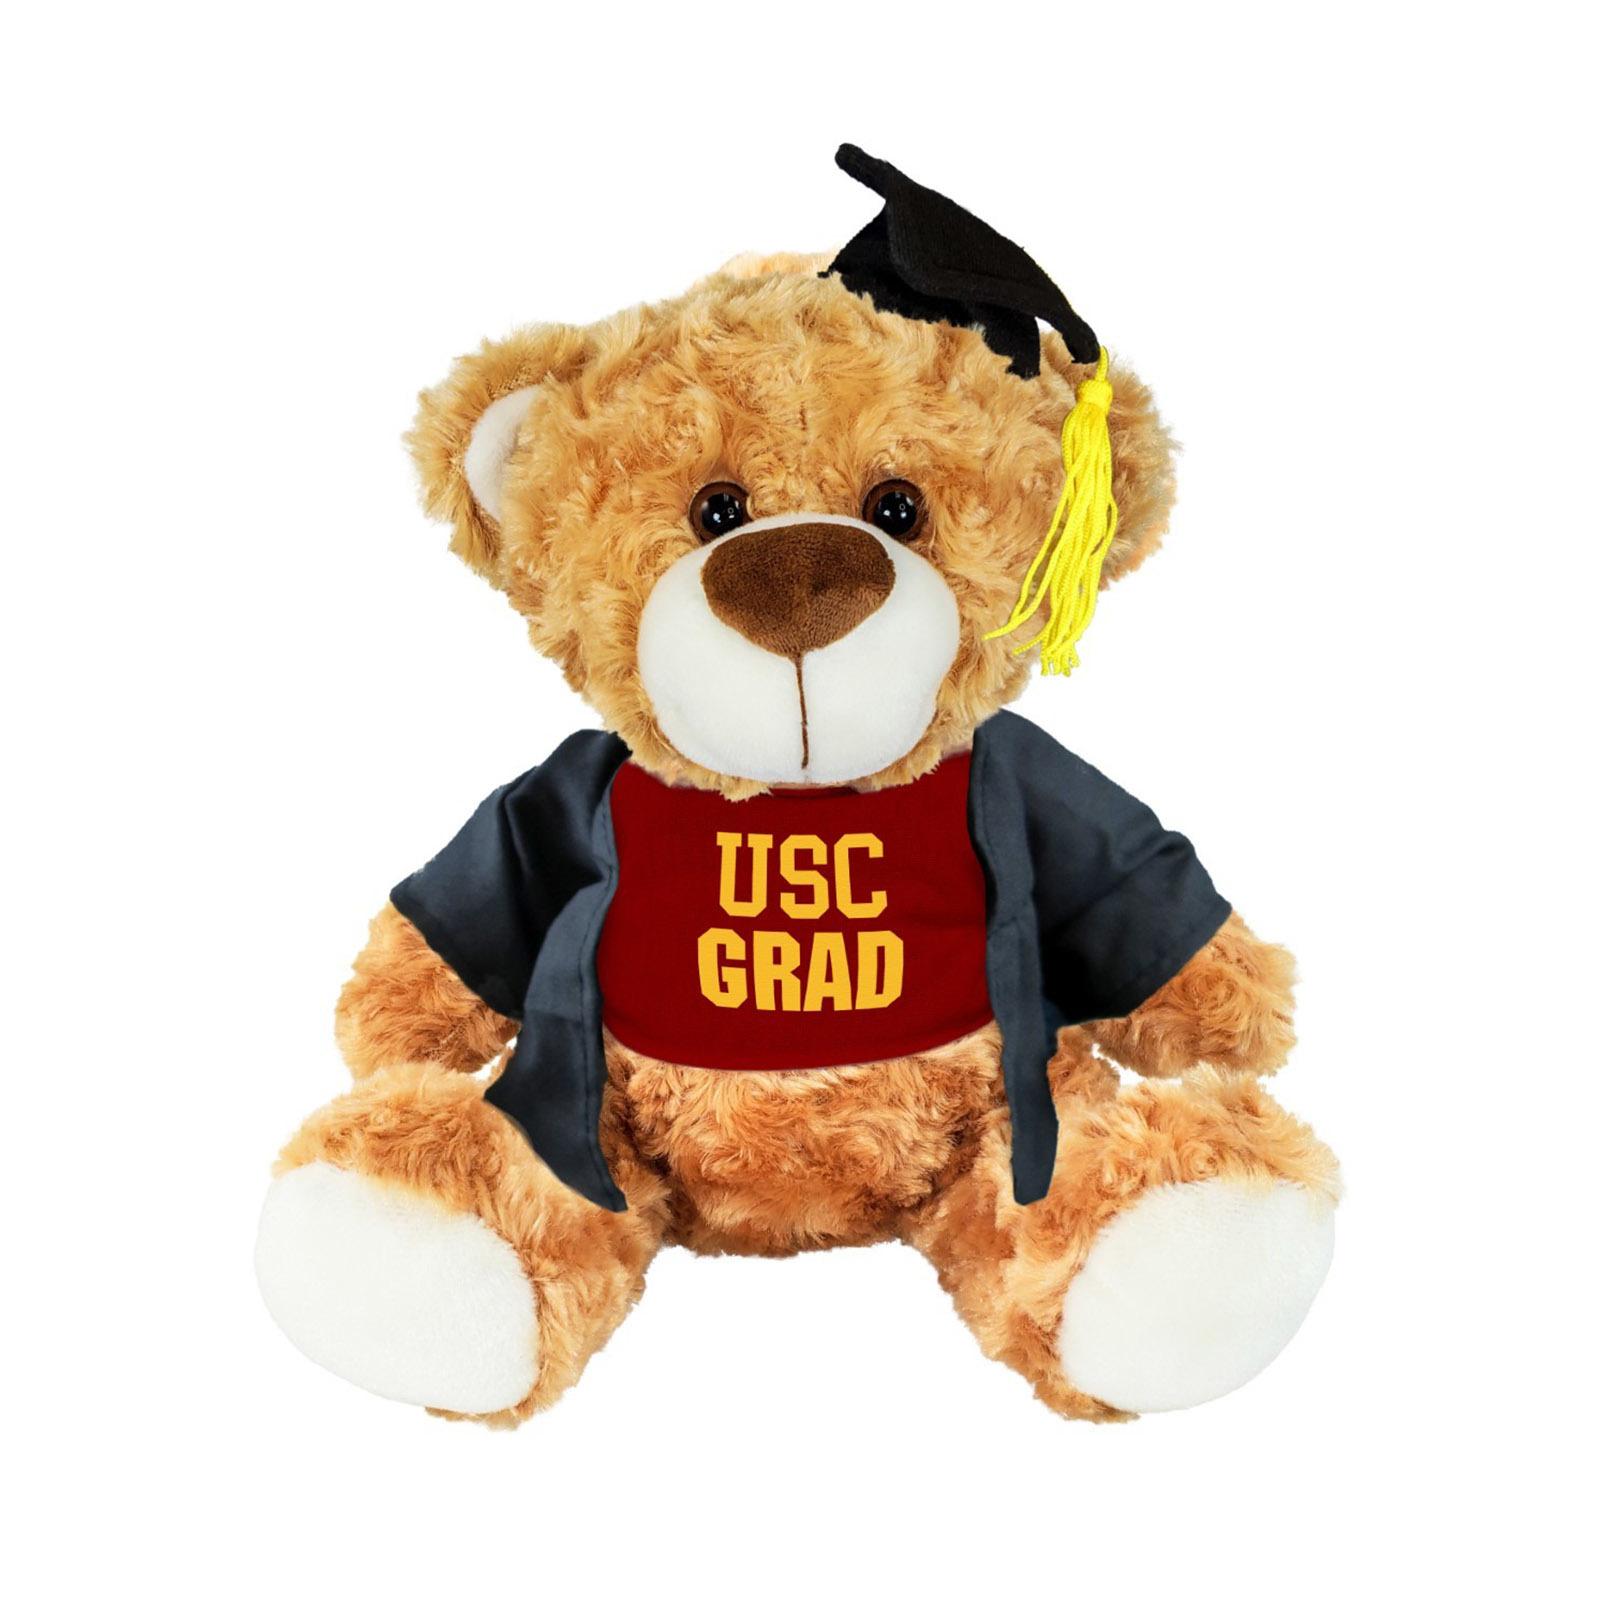 USC Fred Graduation Bear by Mascot Factory image01